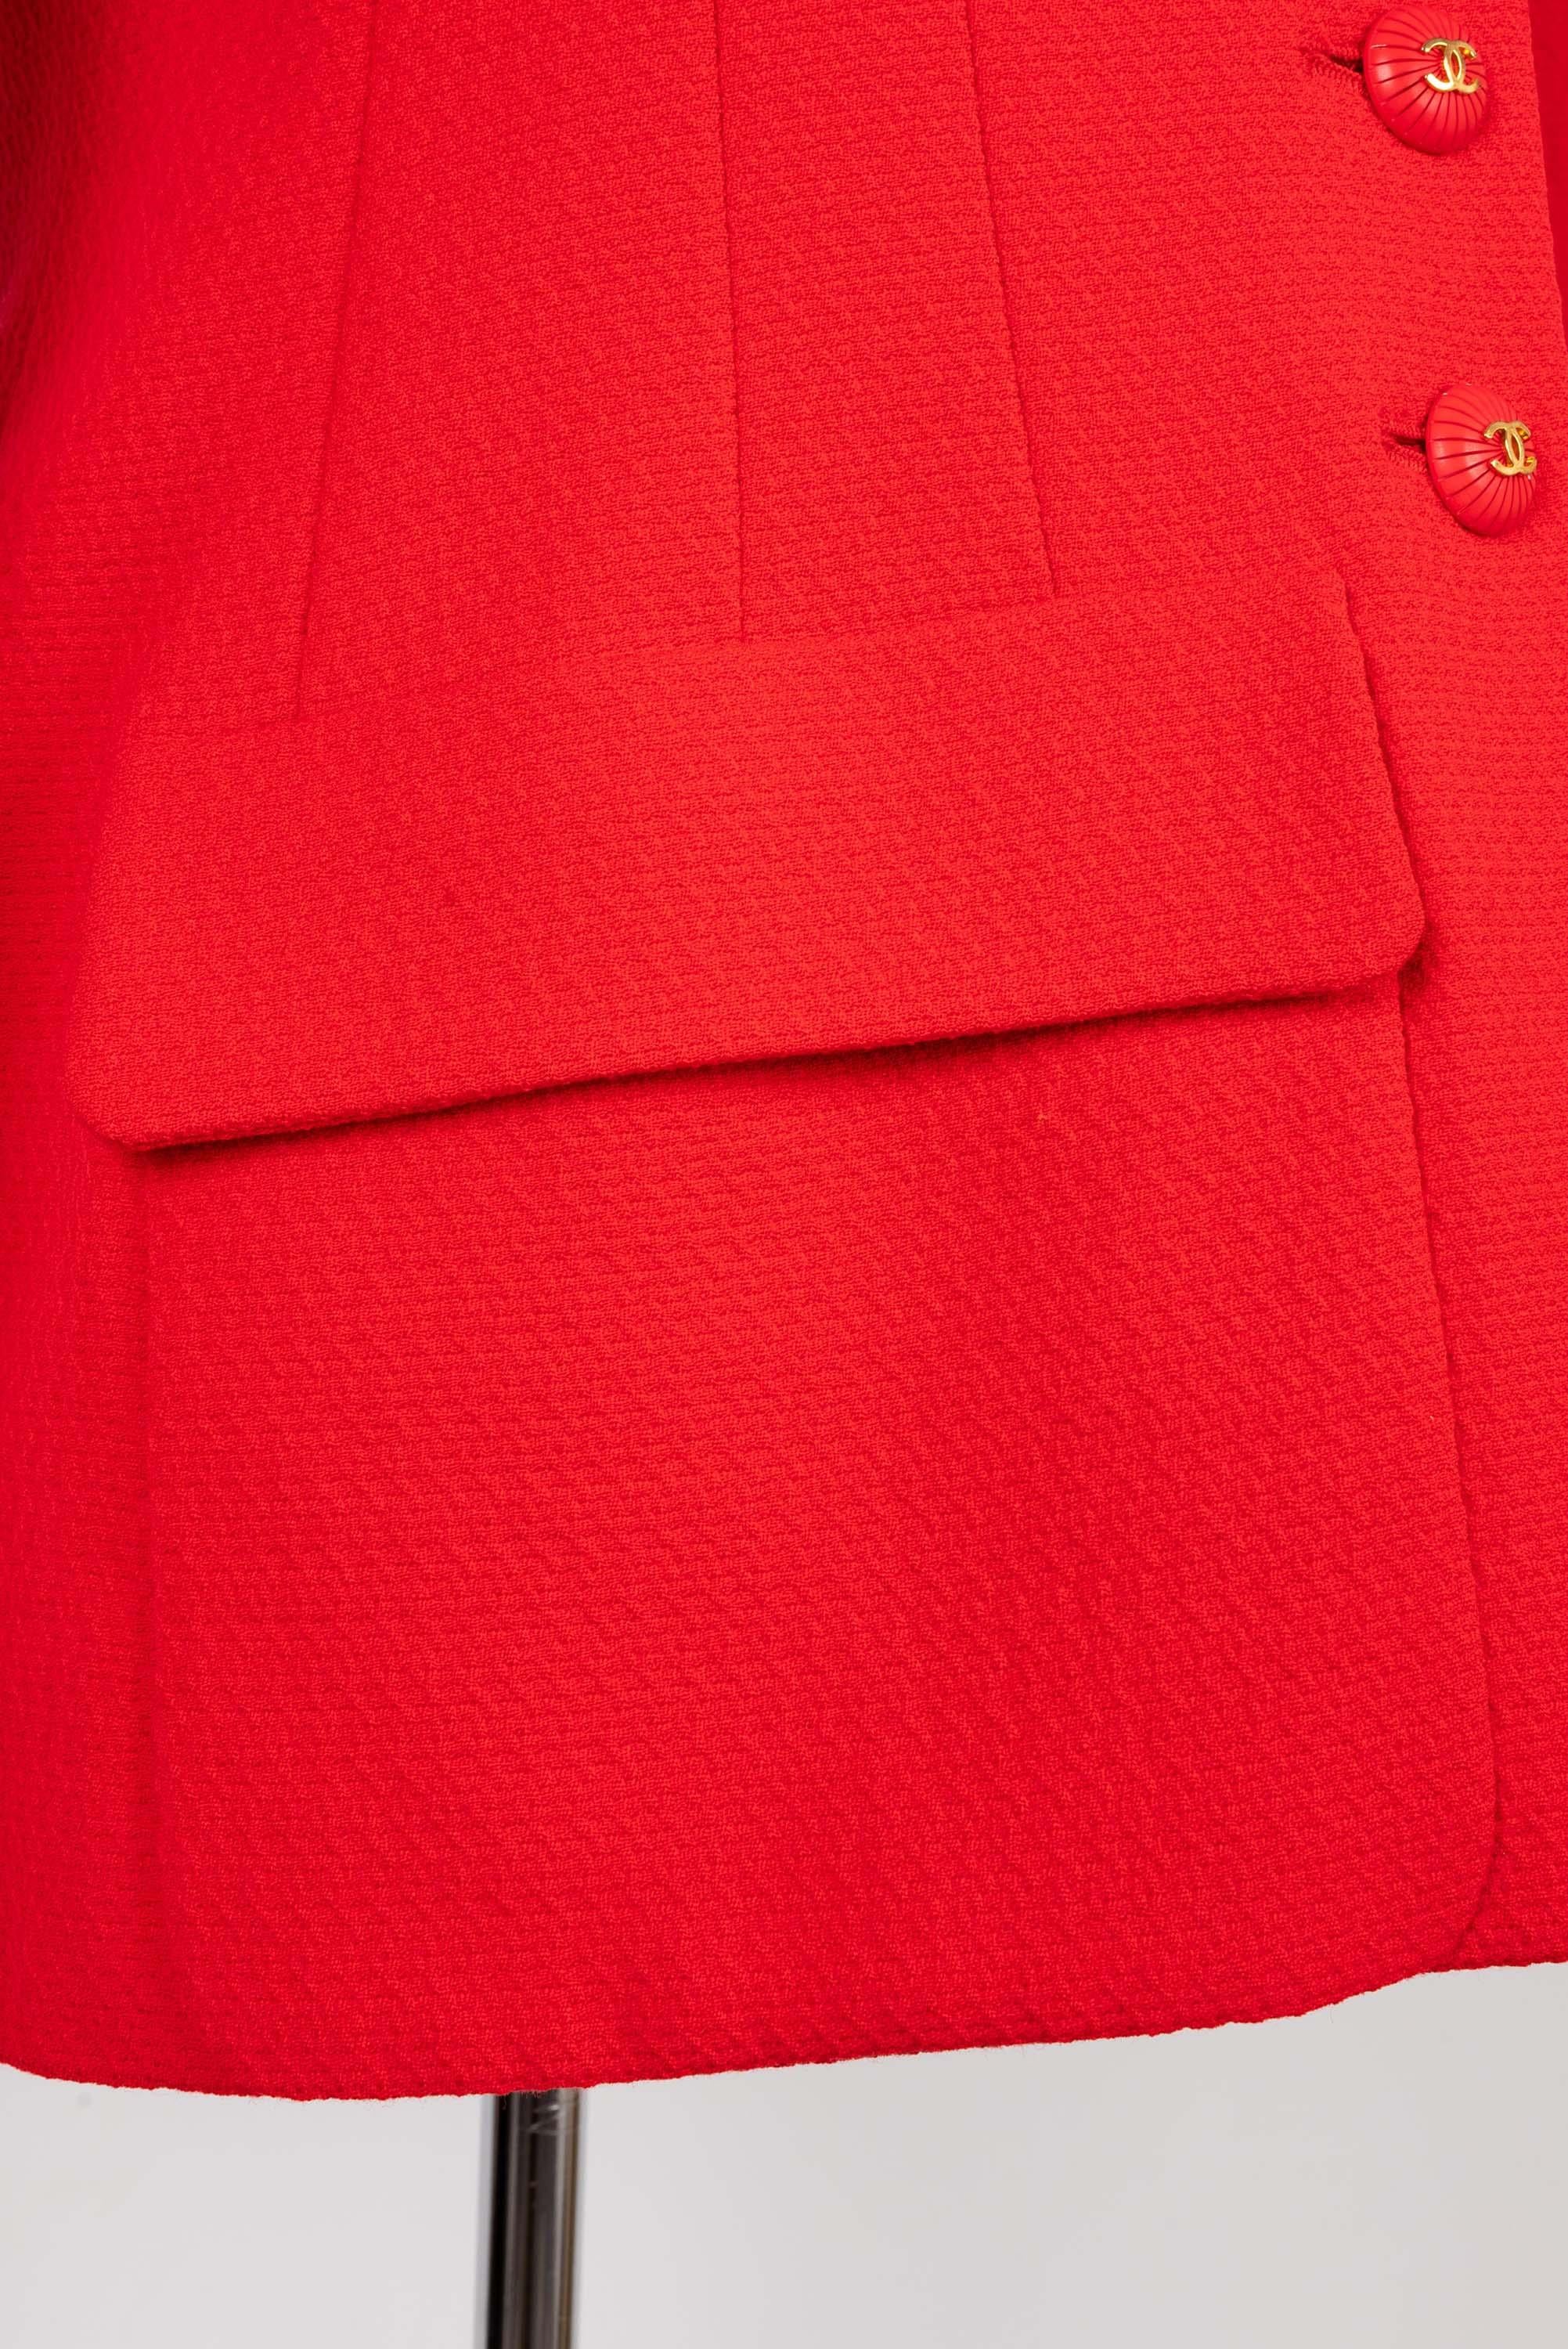 Chanel red jacket Spring-Summer 1993 2